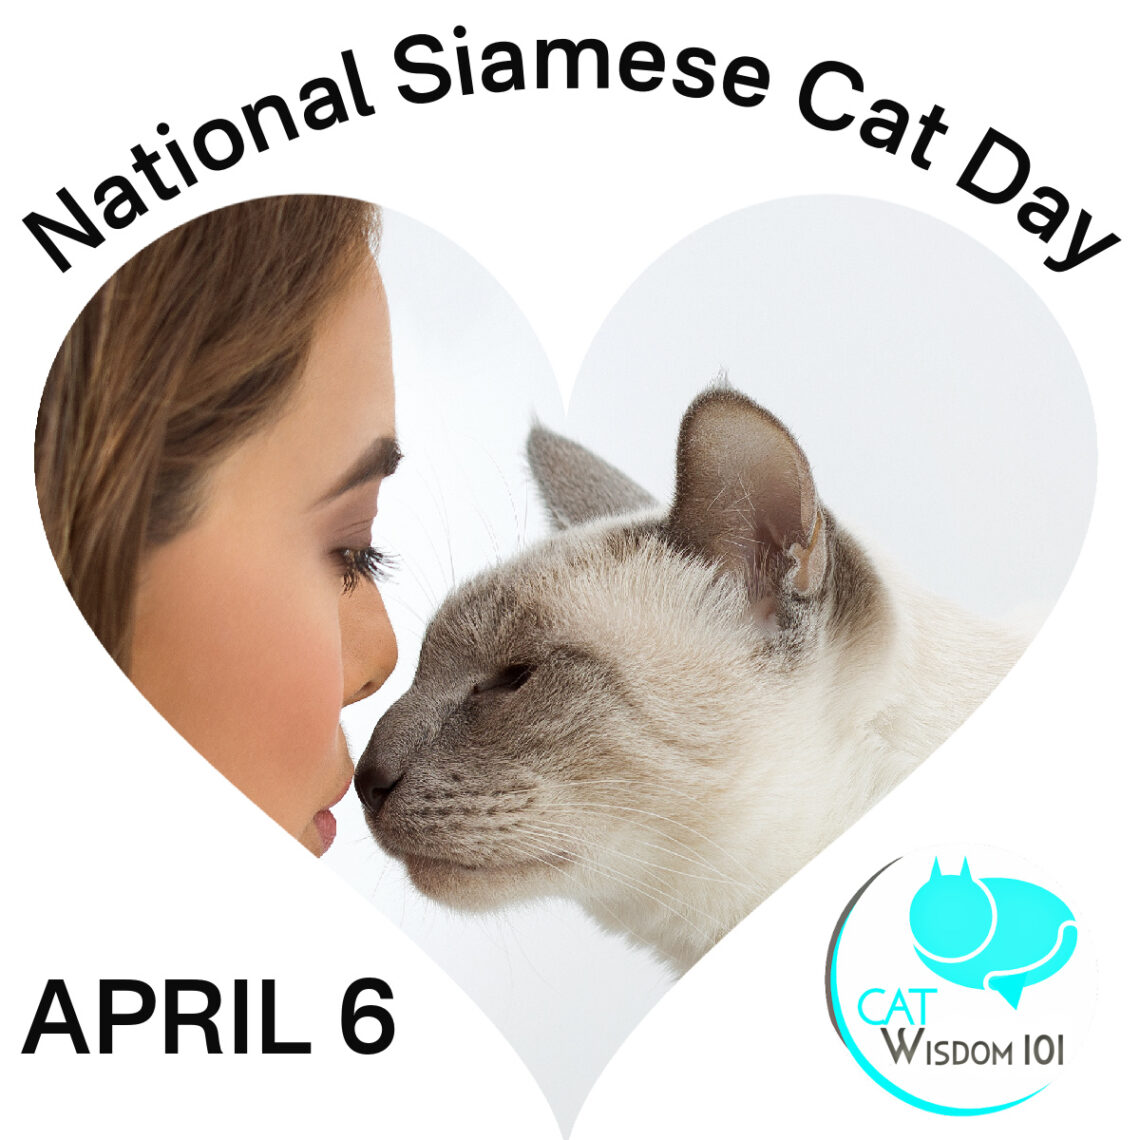 National Siamese cat day | Cat Wisdom 101